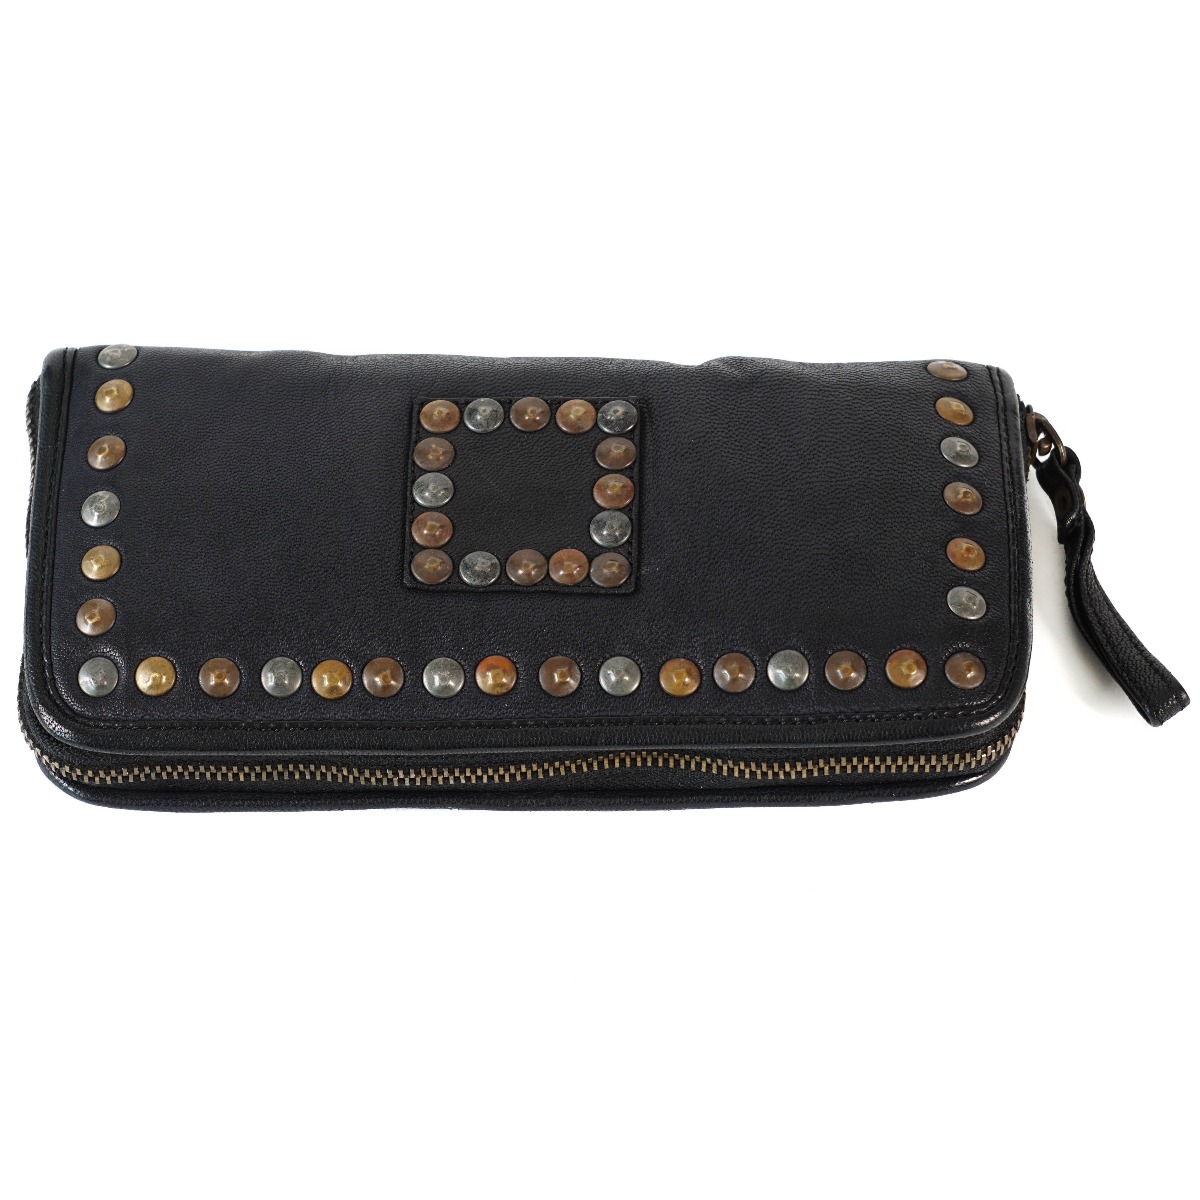 Leather wallet black color